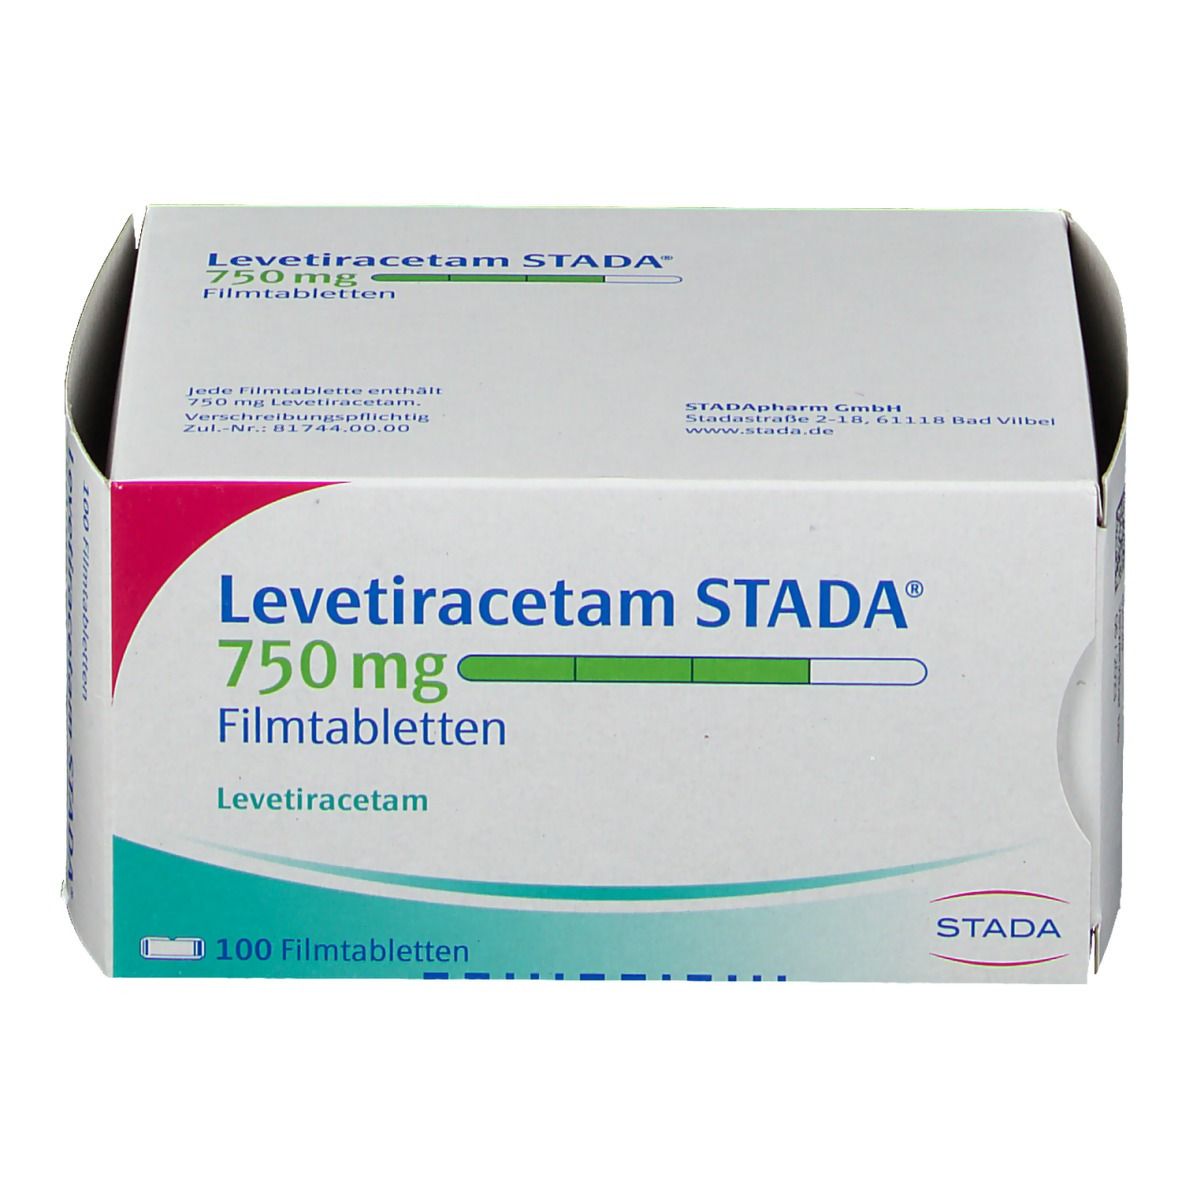 Levetiracetam STADA® 750 mg